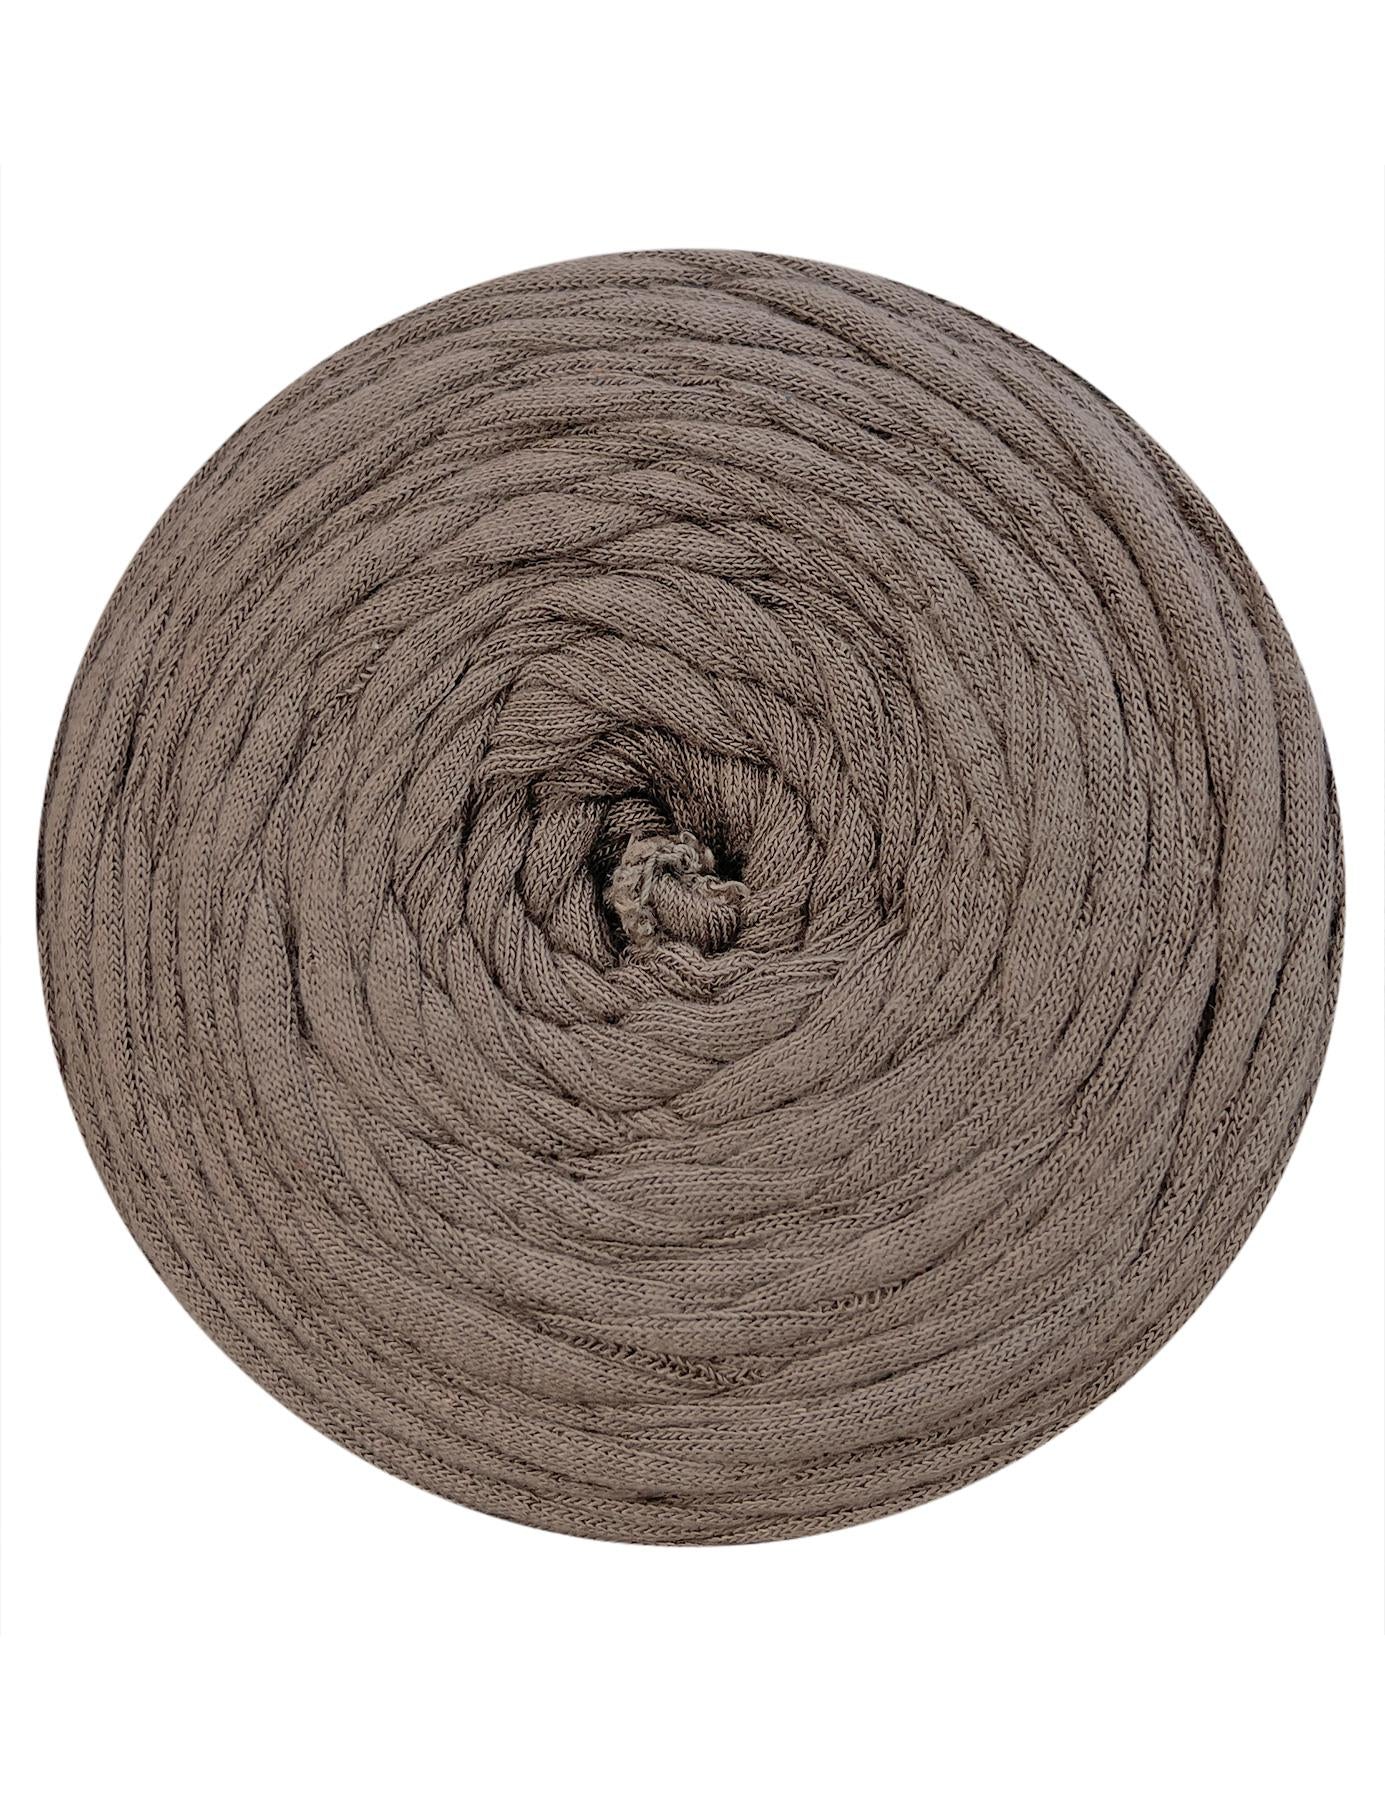 Dark moss brown t-shirt yarn by Hoooked Zpagetti (100-120m)